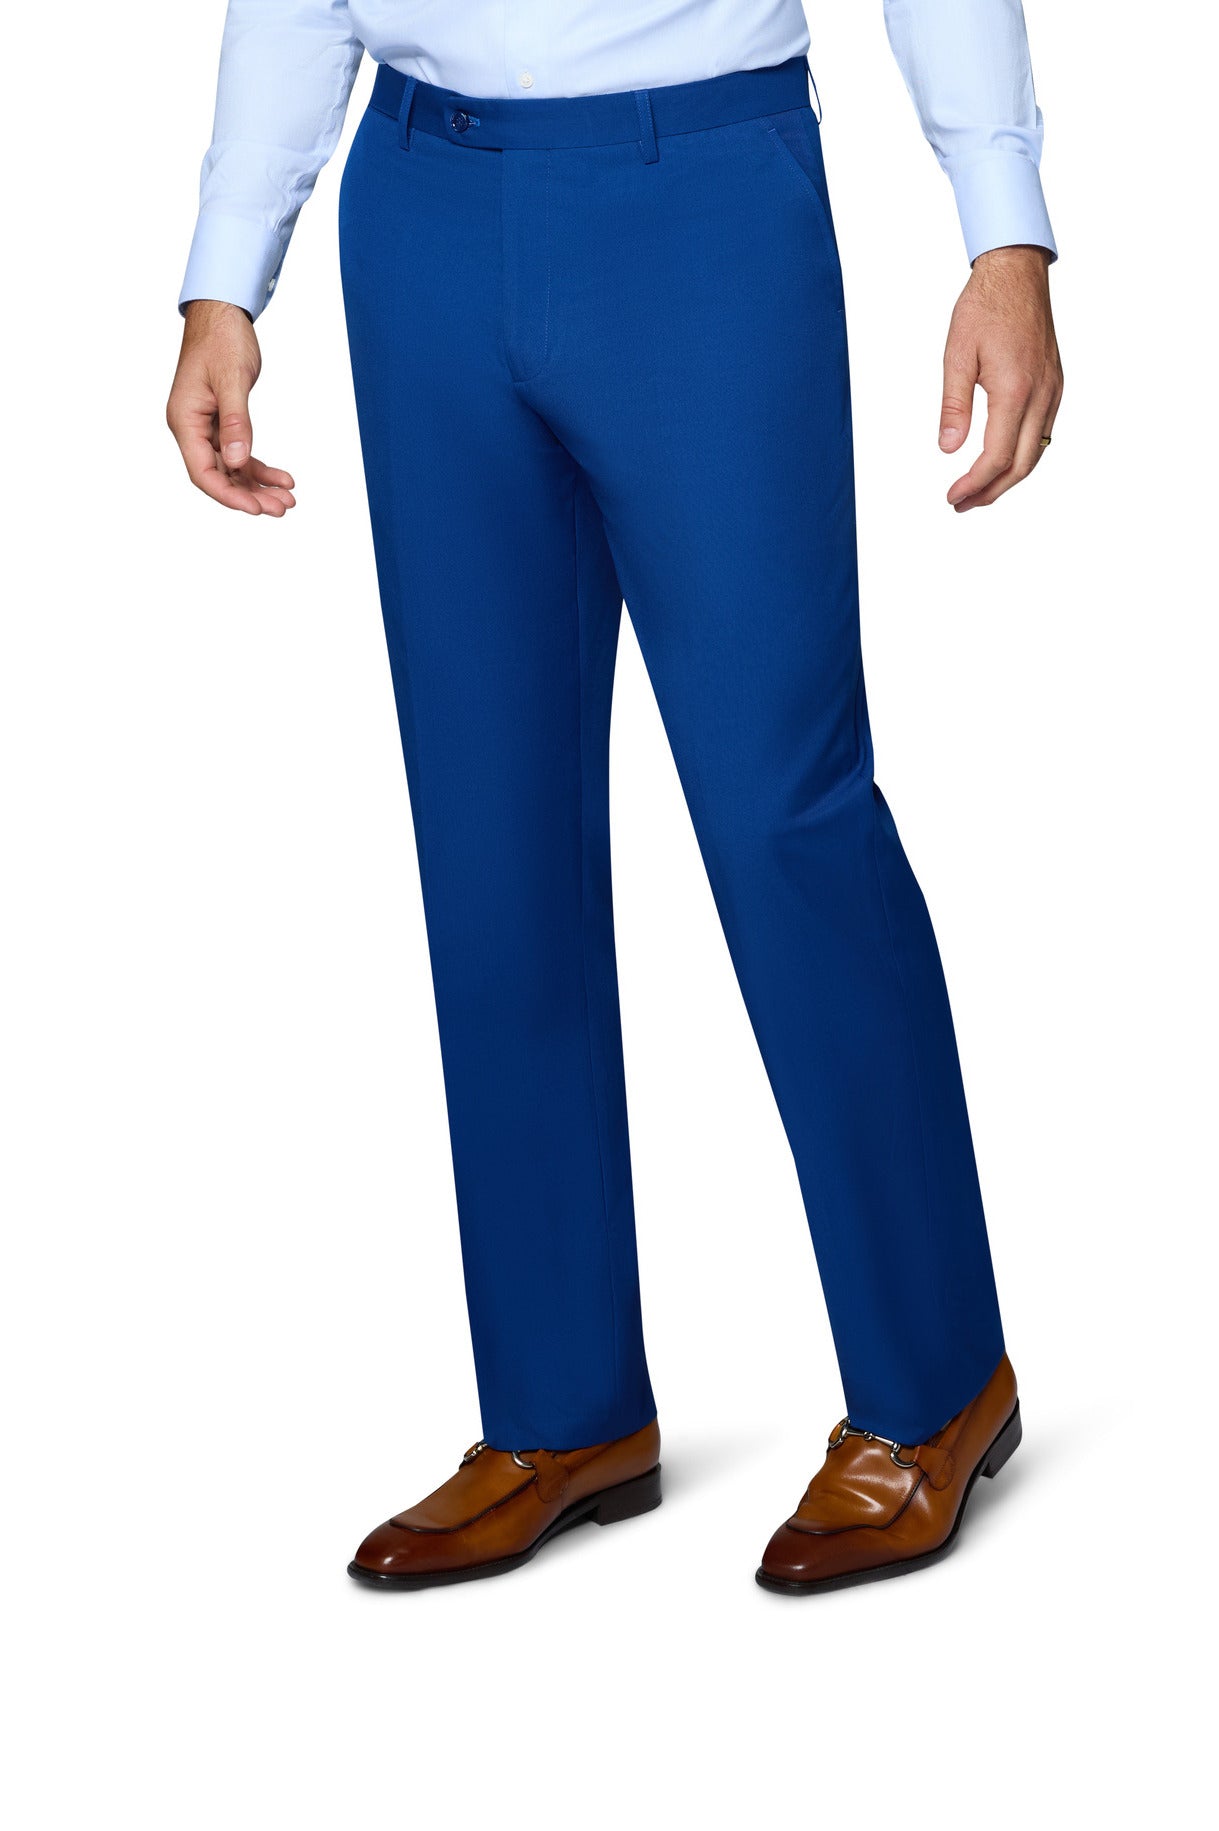 Berragamo Vested Solid French Blue Slim Fit